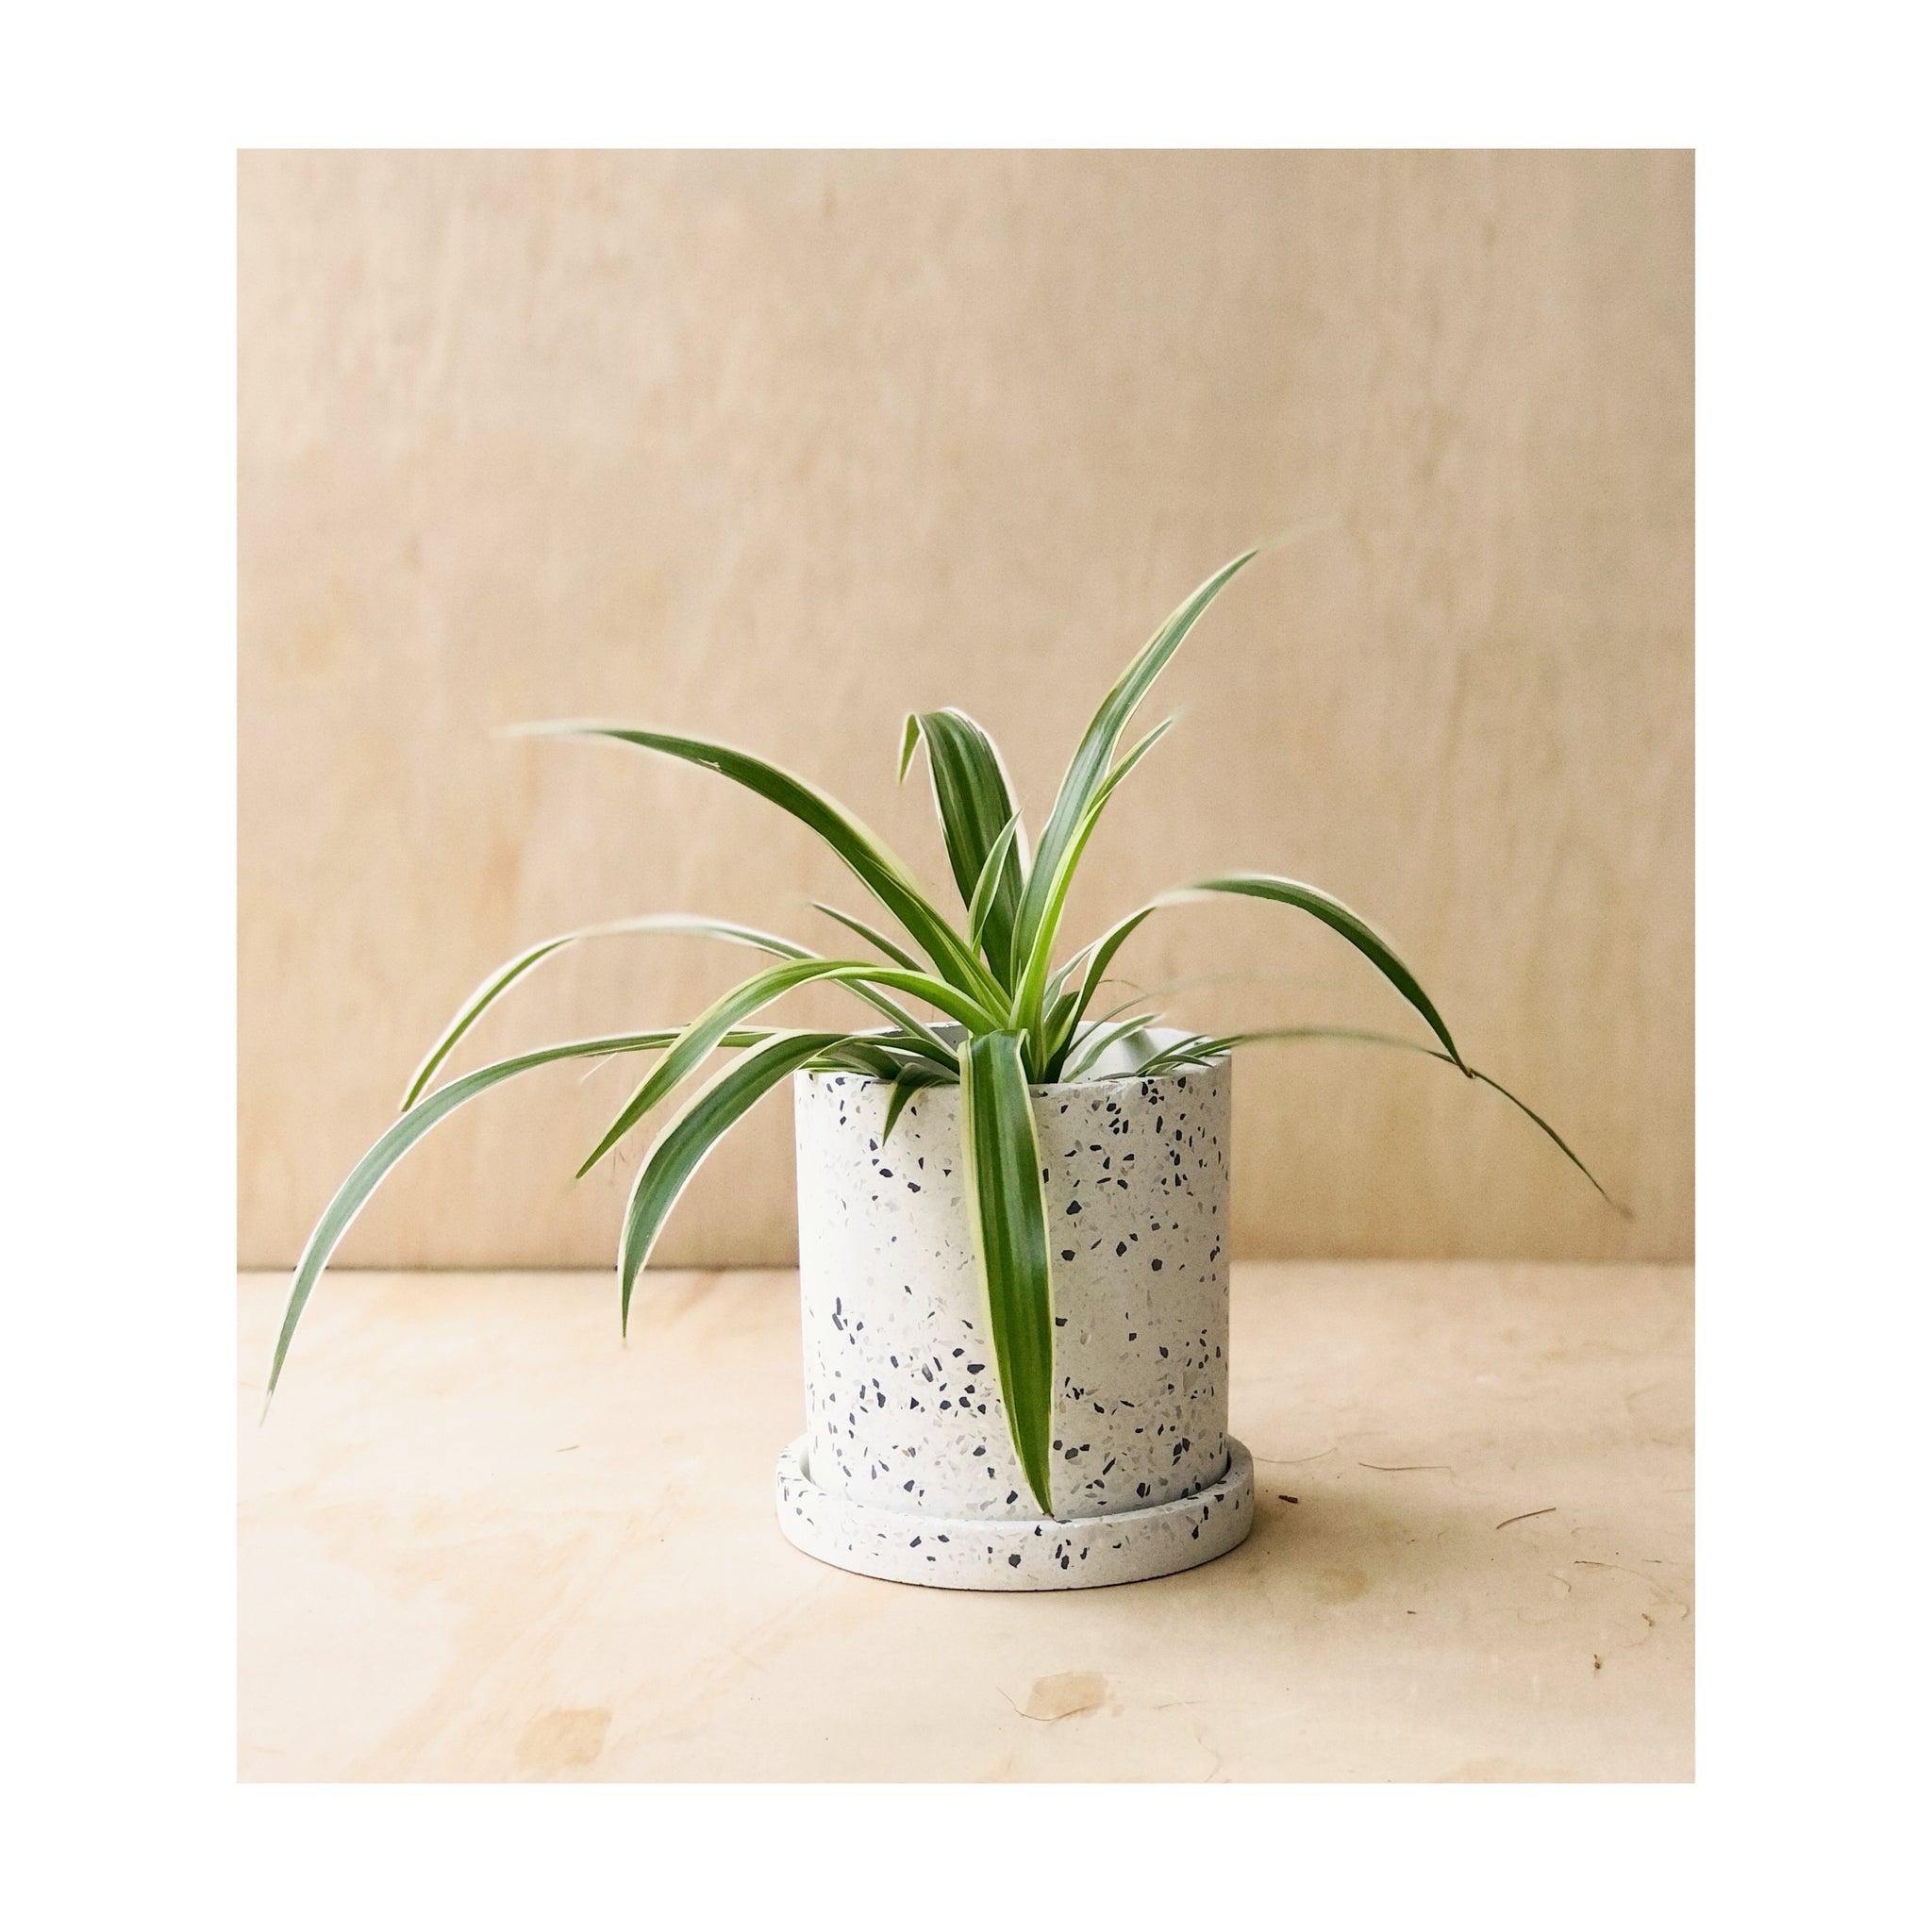 Spider Plant (Chlorophytum Comosum) Pet Friendly Indoor Plant + Sia Terrazzo Plant Pot with Saucer